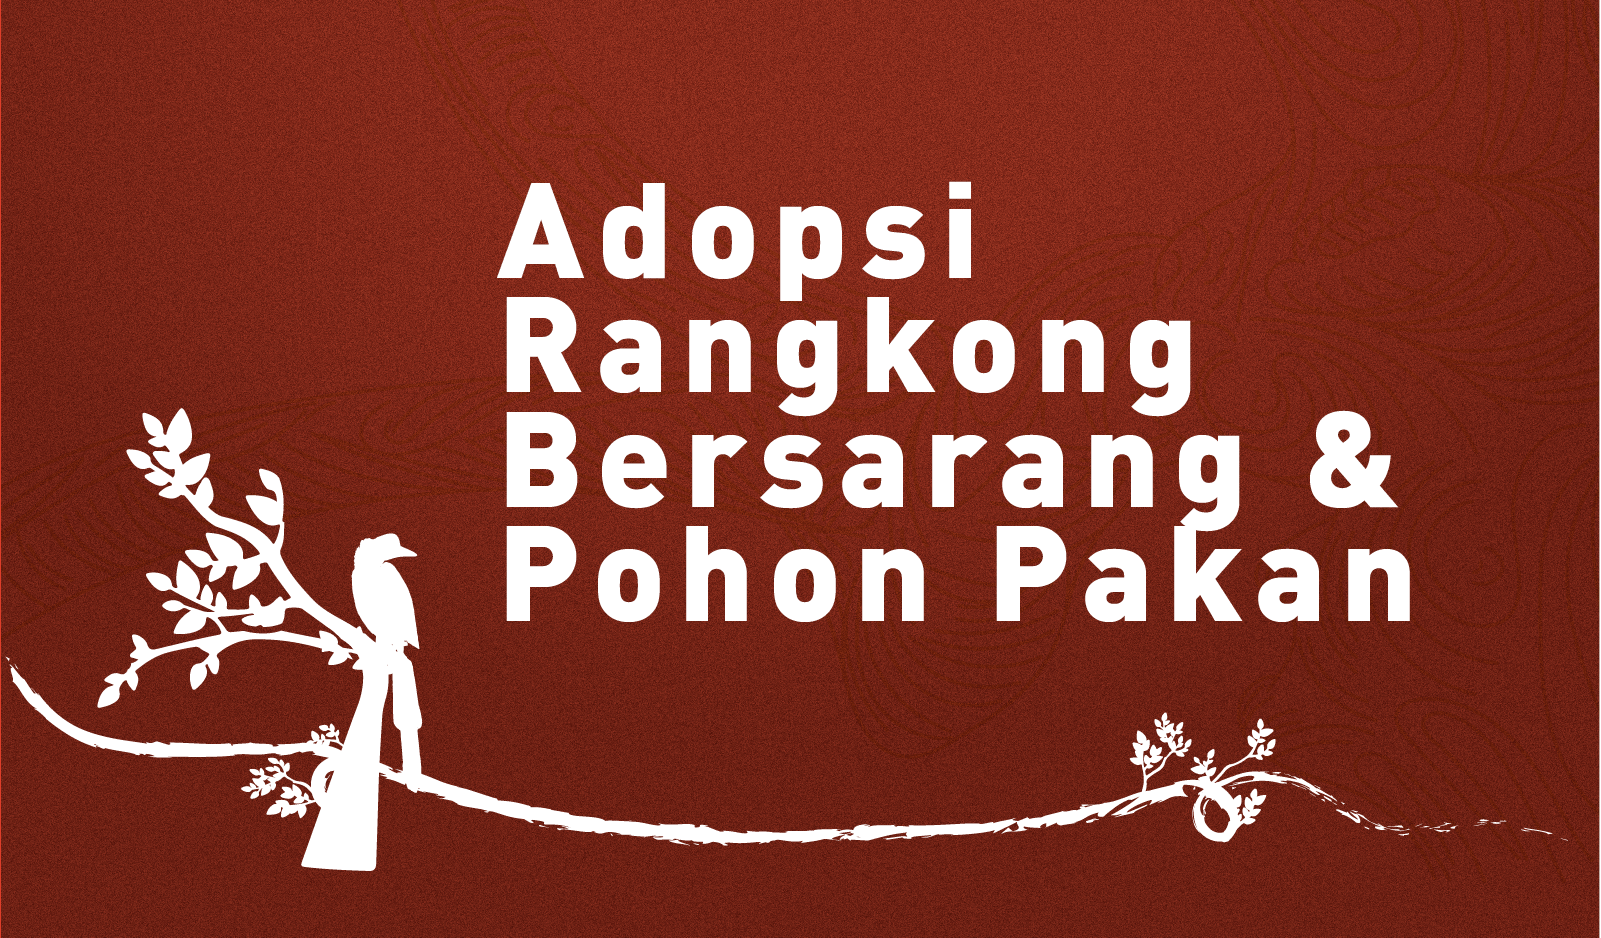 FAQ Adopsi Rangkong Bersarang & Pohon Pakan